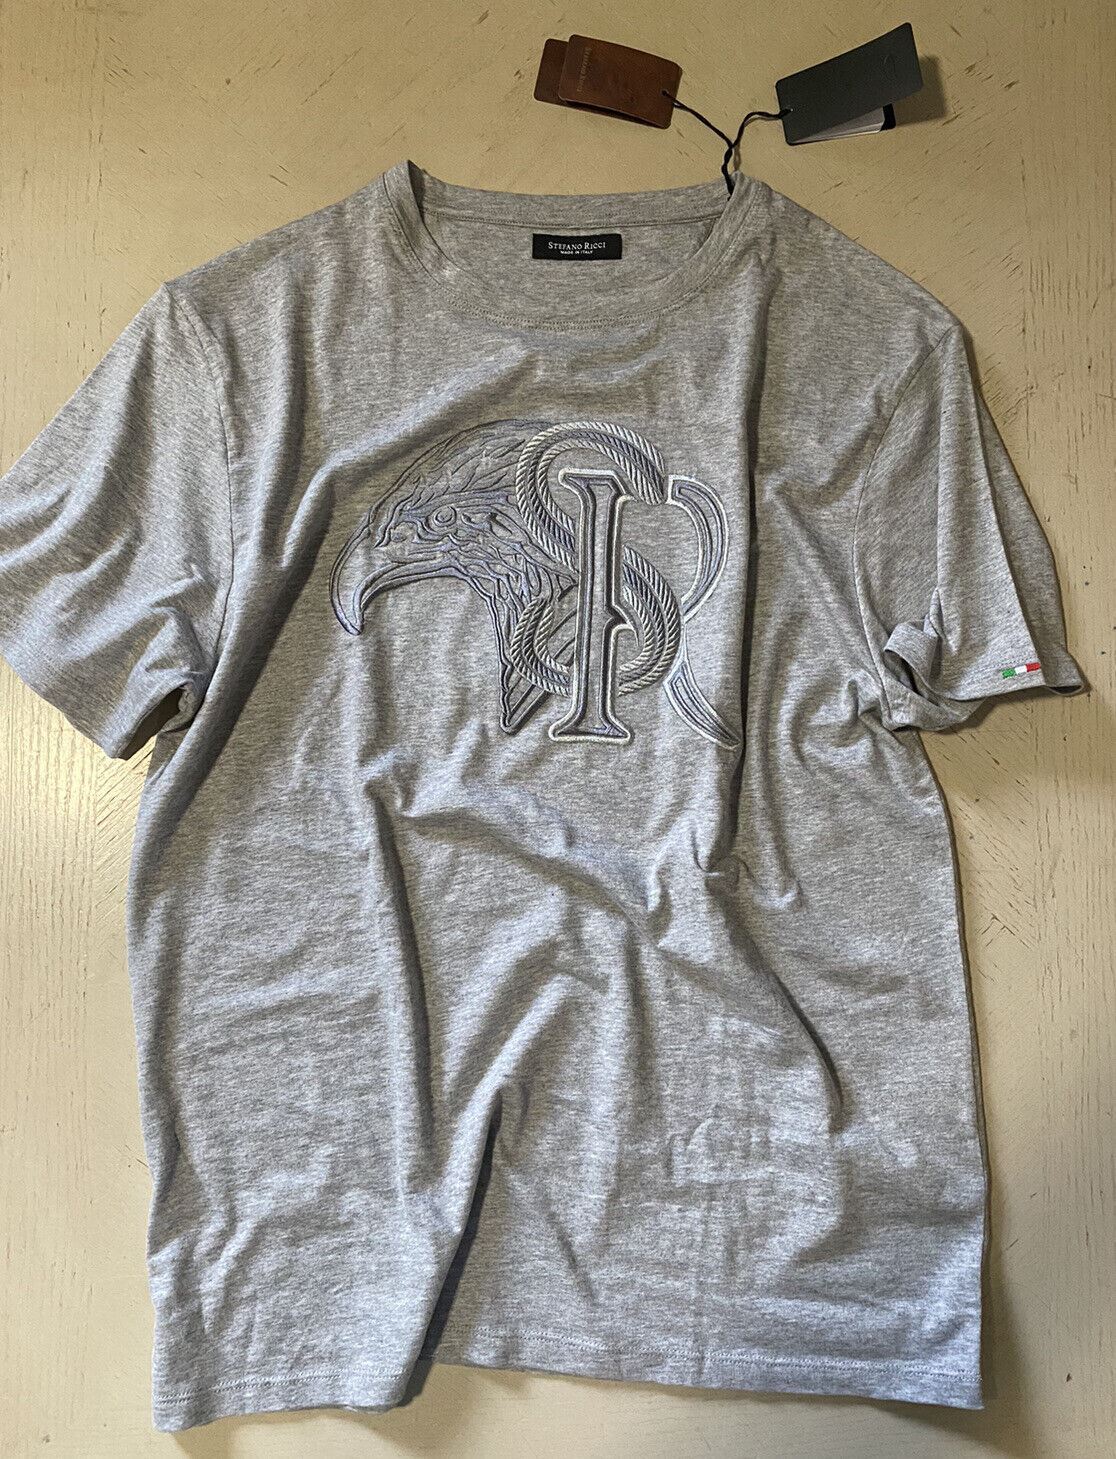 Мужская футболка из хлопкового модала NWT Stefano Ricci, серая, размер XL, США (2XL, ЕС)